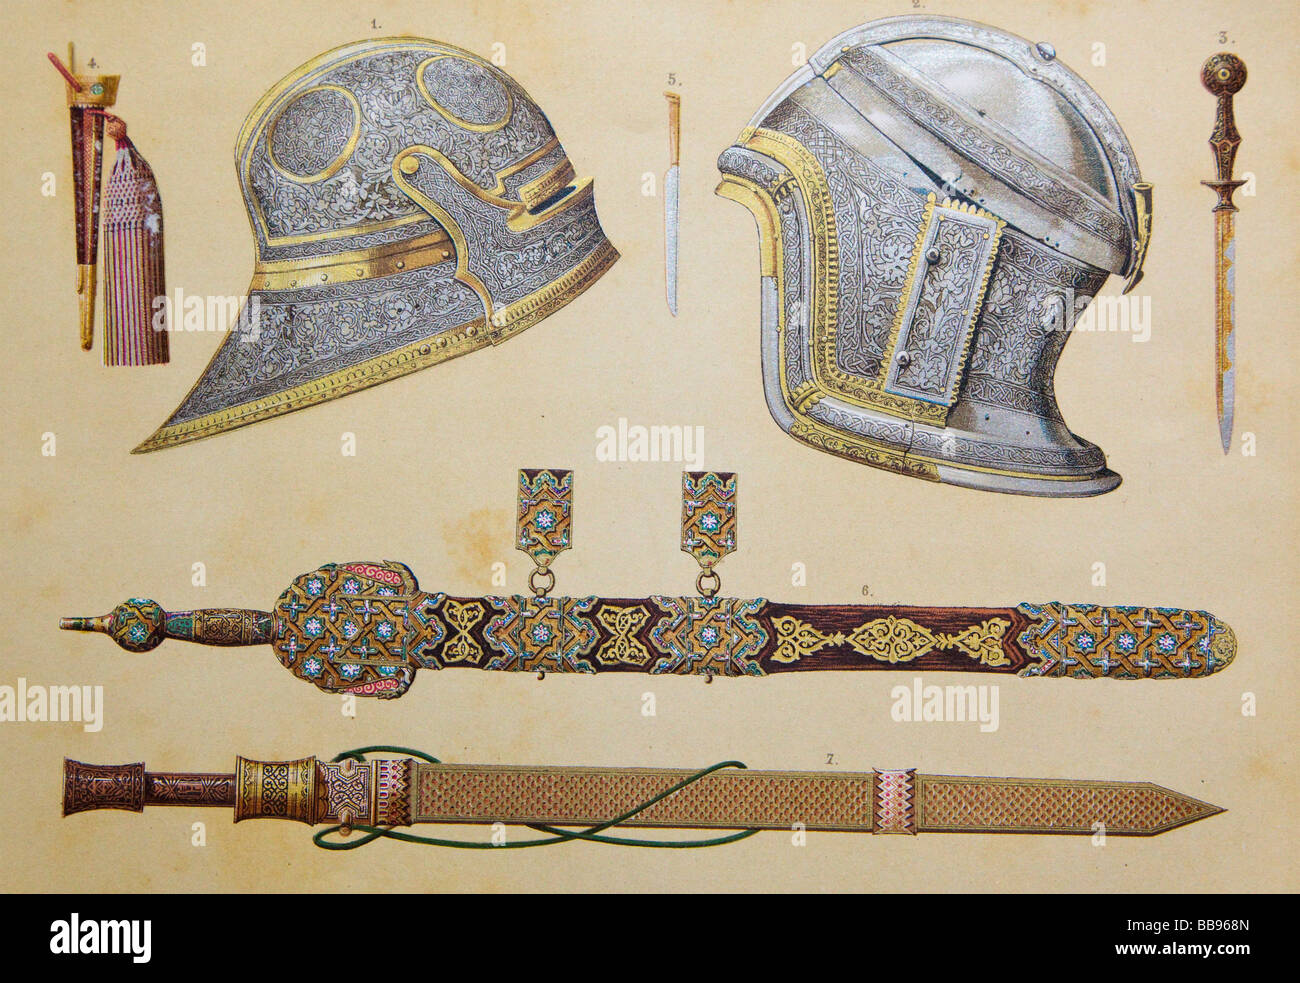 arms-which-belonged-to-boabdil-born-circa-1460-died-1533-last-moorish-BB968N.jpg